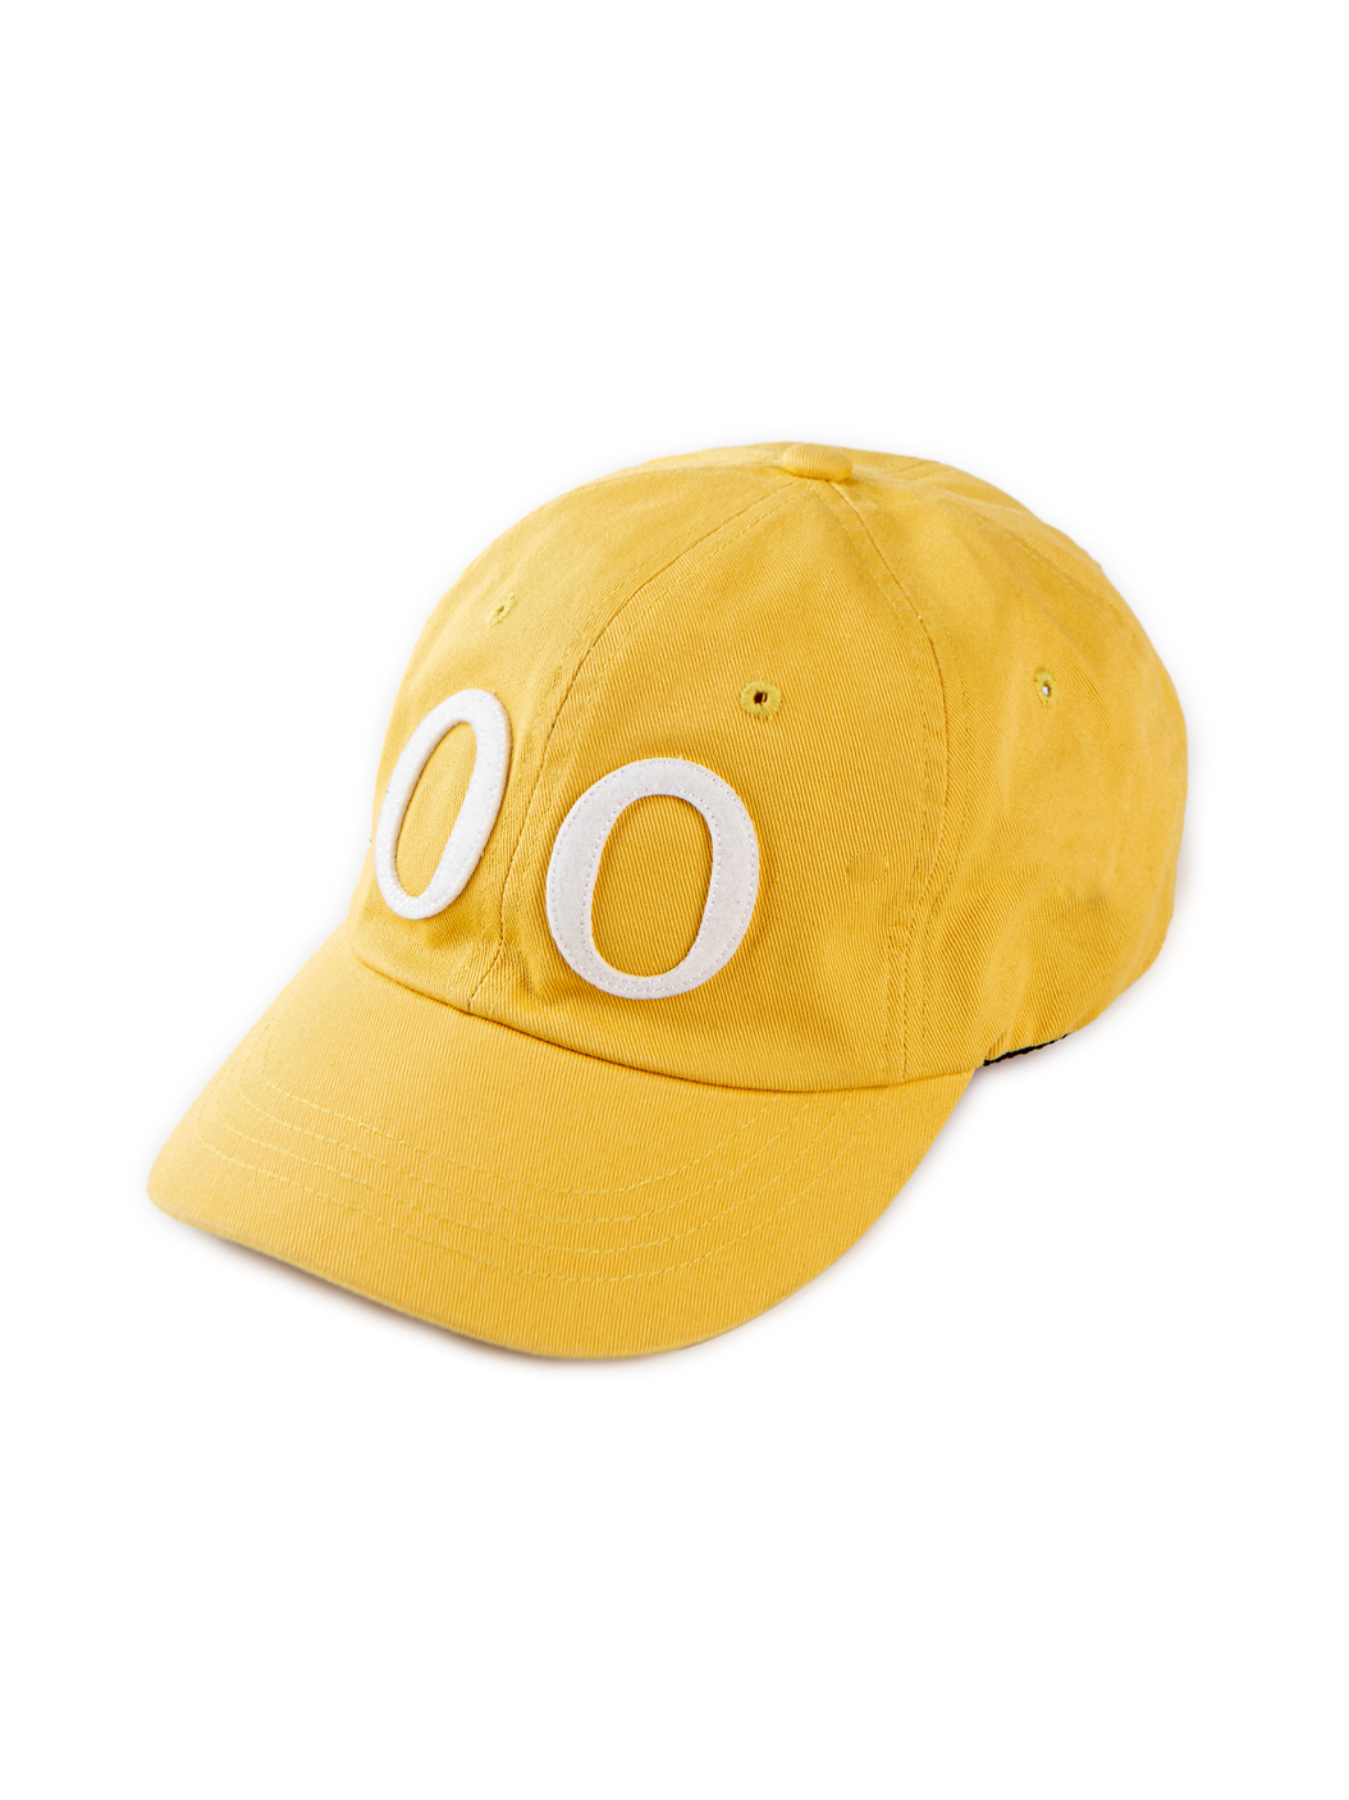 Symmetric O-logo cap #16 [yellow]